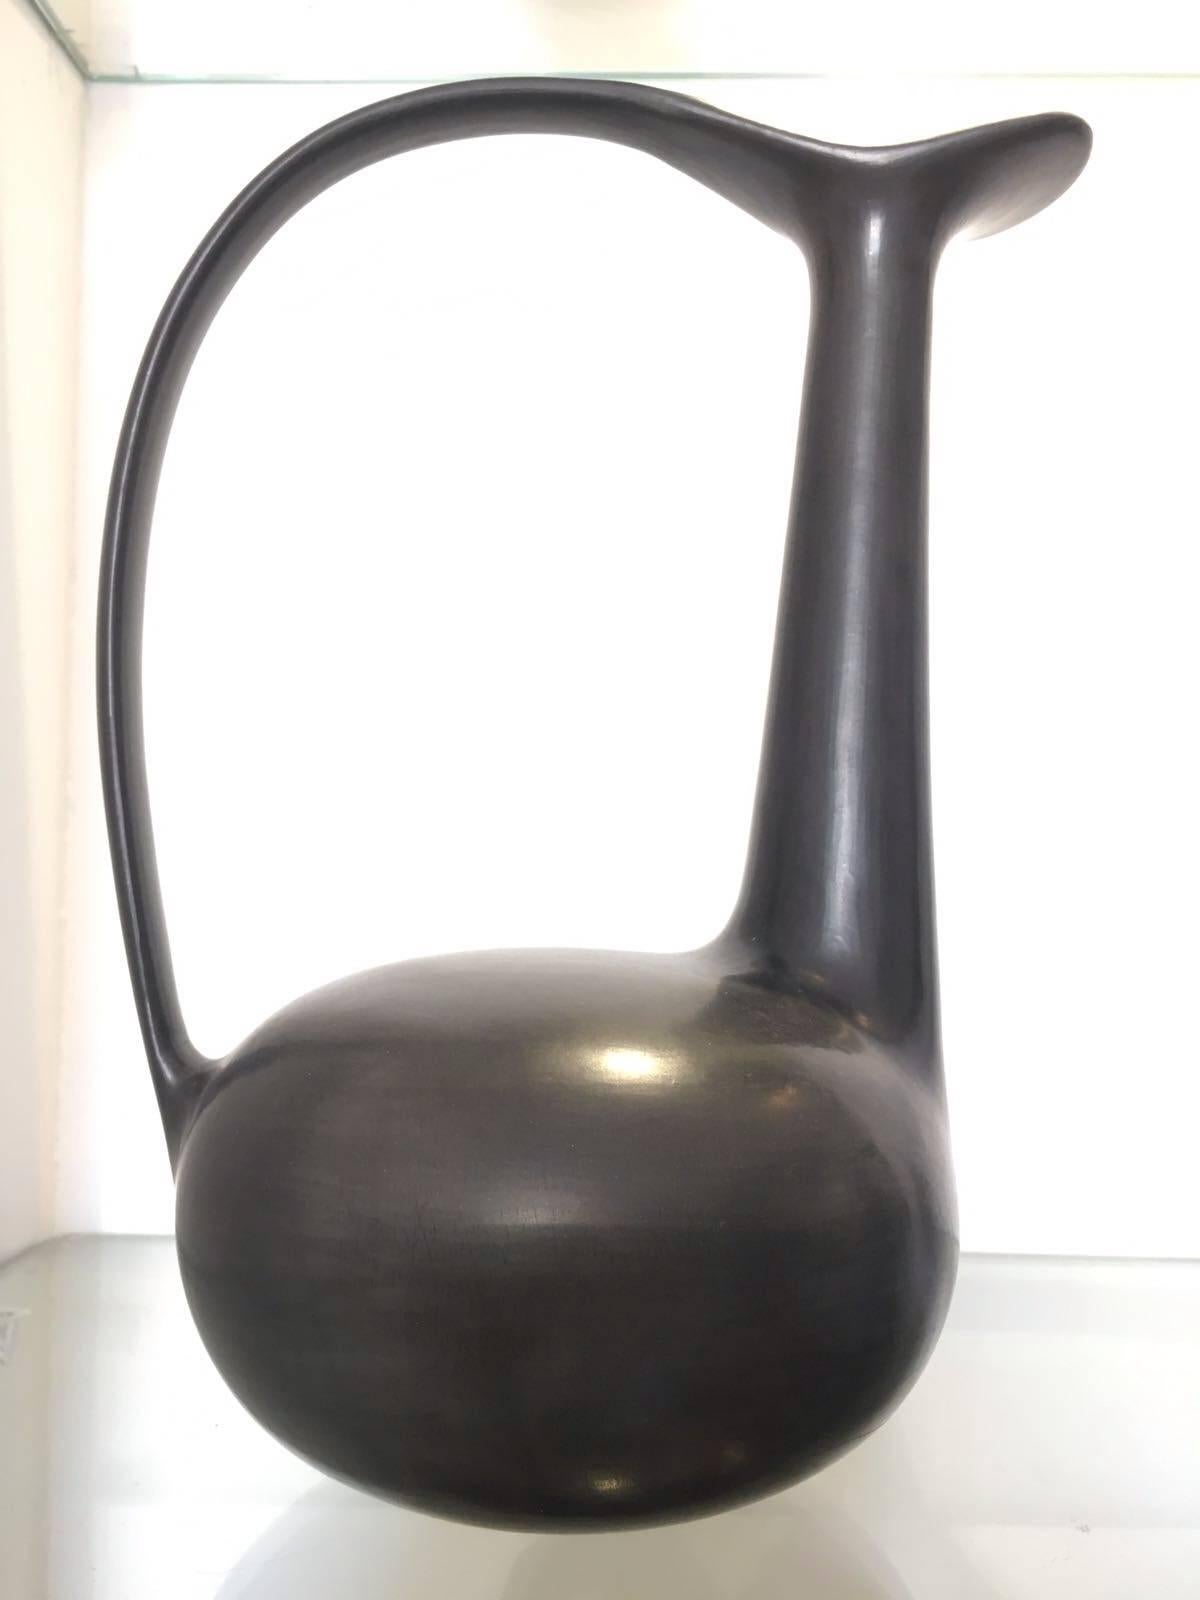  1940s Bucchero Vase by Gio Ponti 1